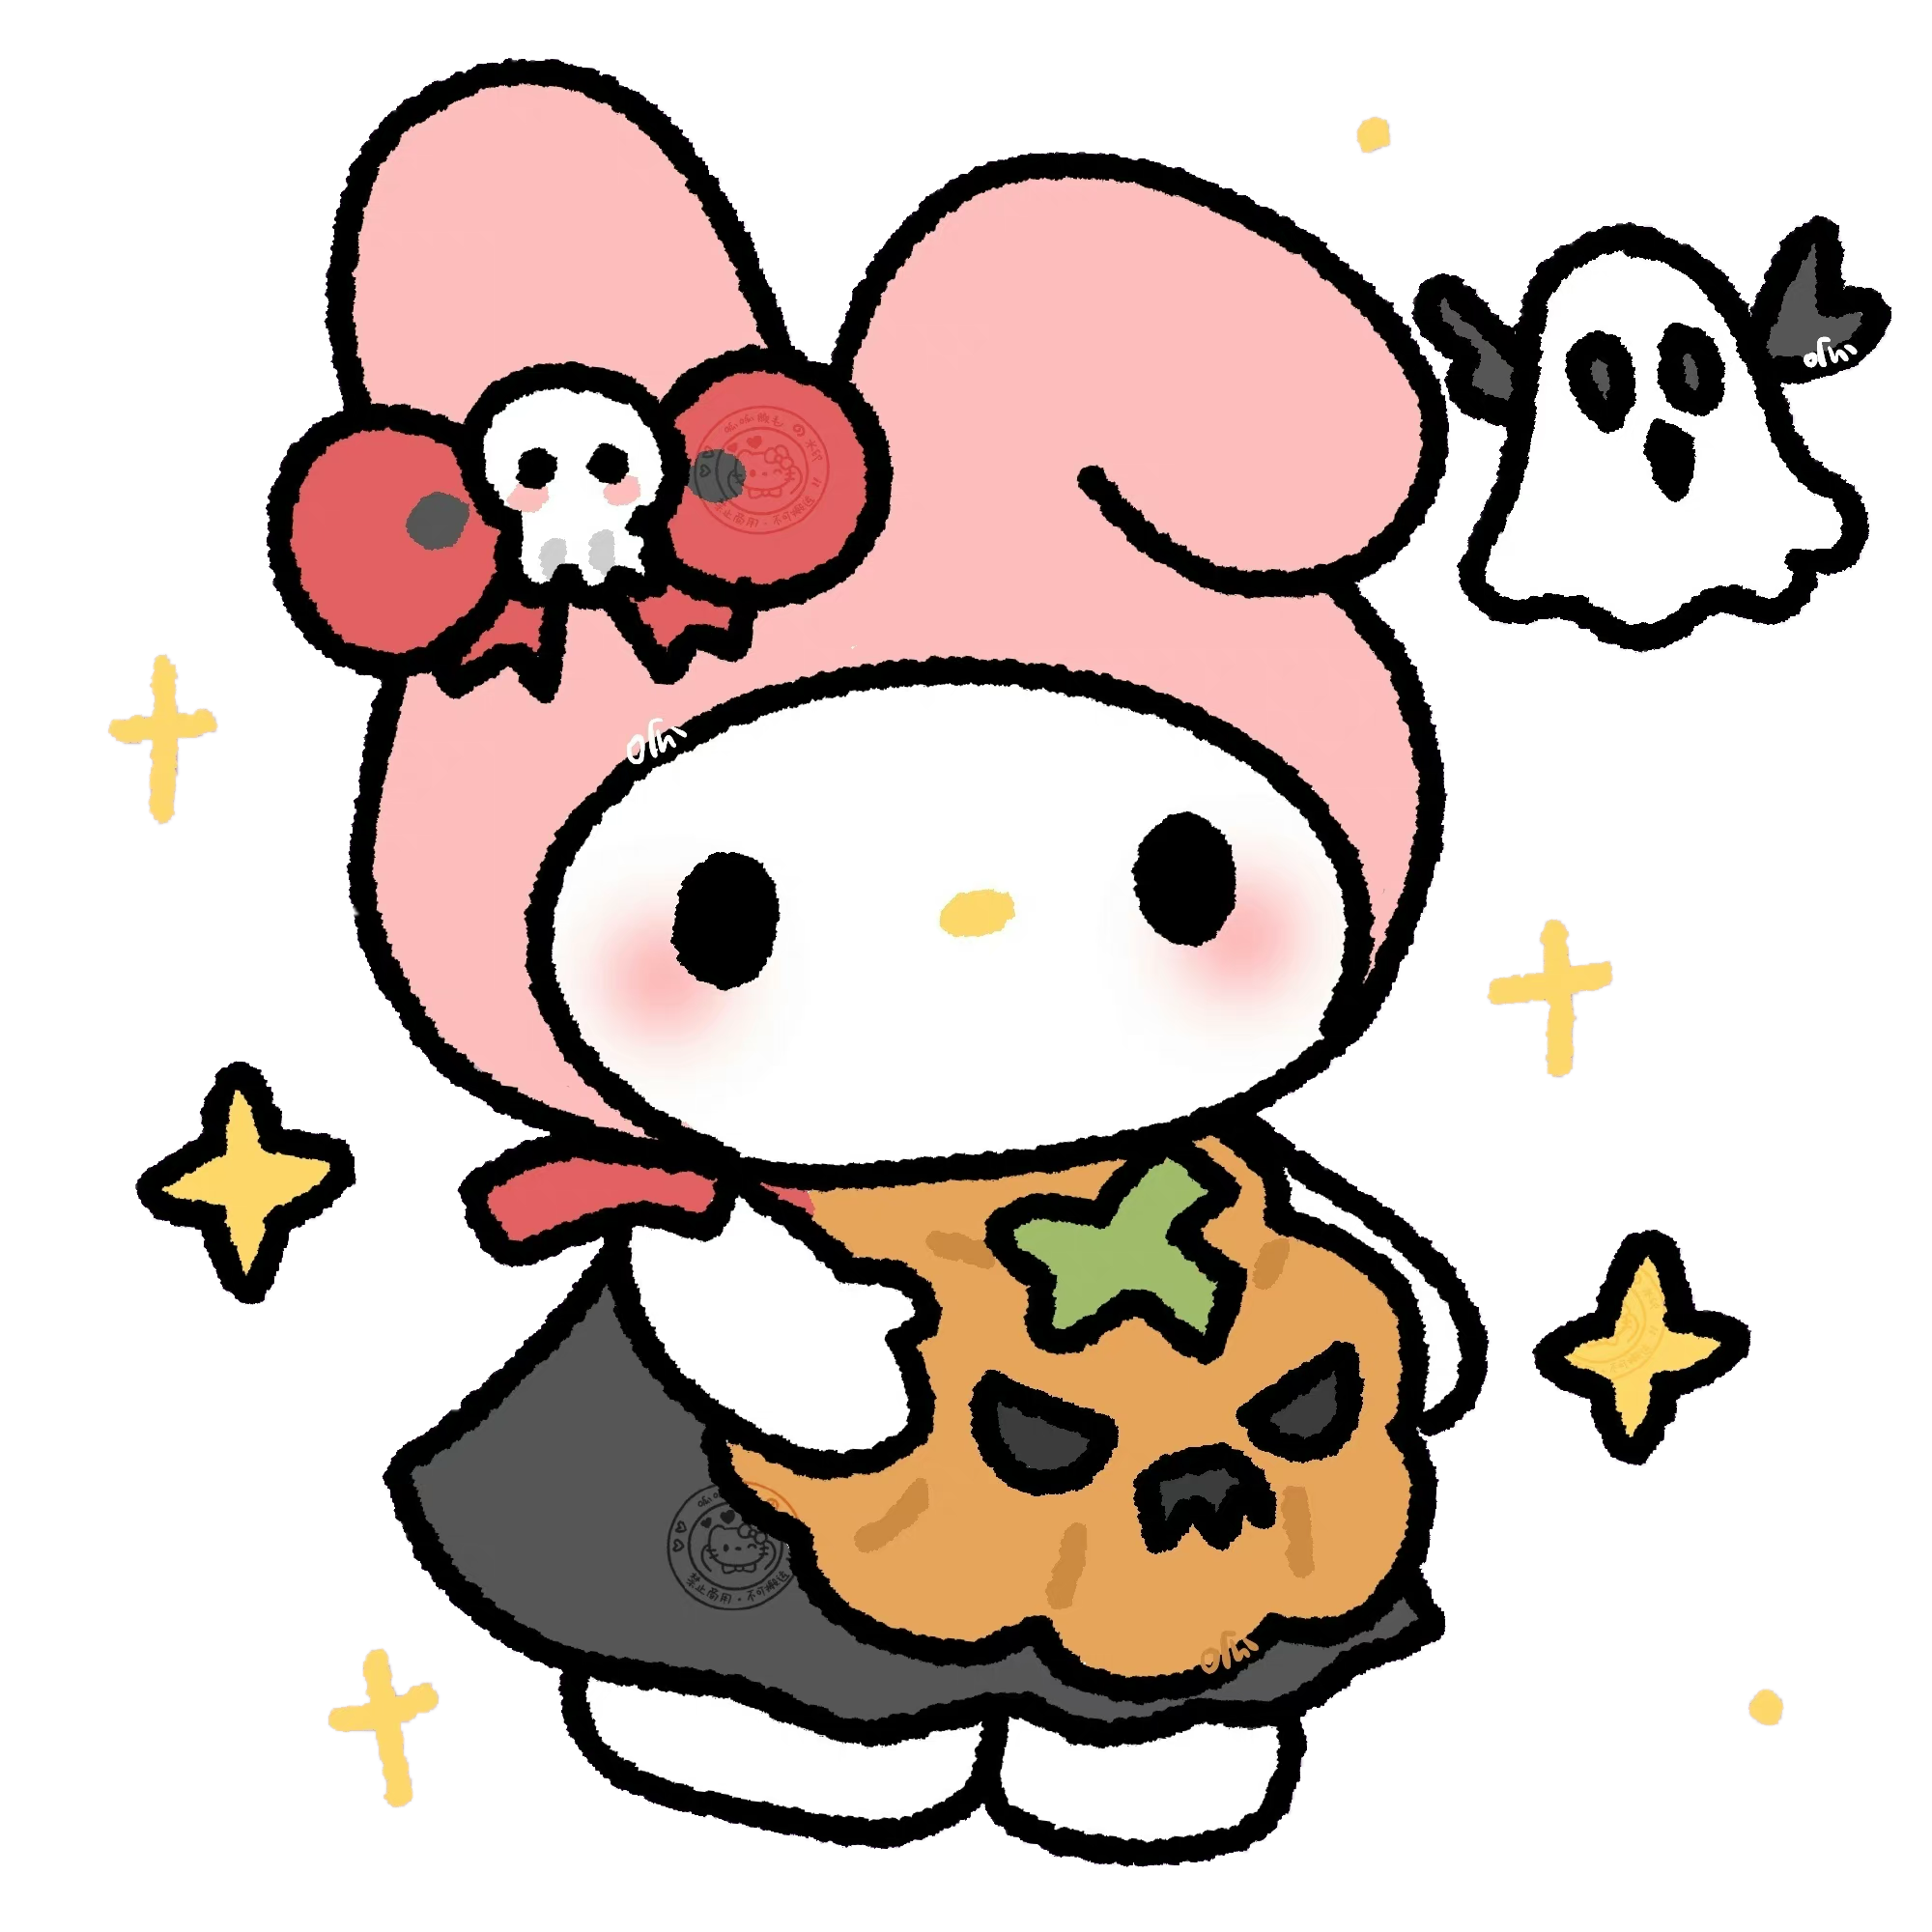 Download Cartoon Hello Kitty PFP Ice Cream Wallpaper